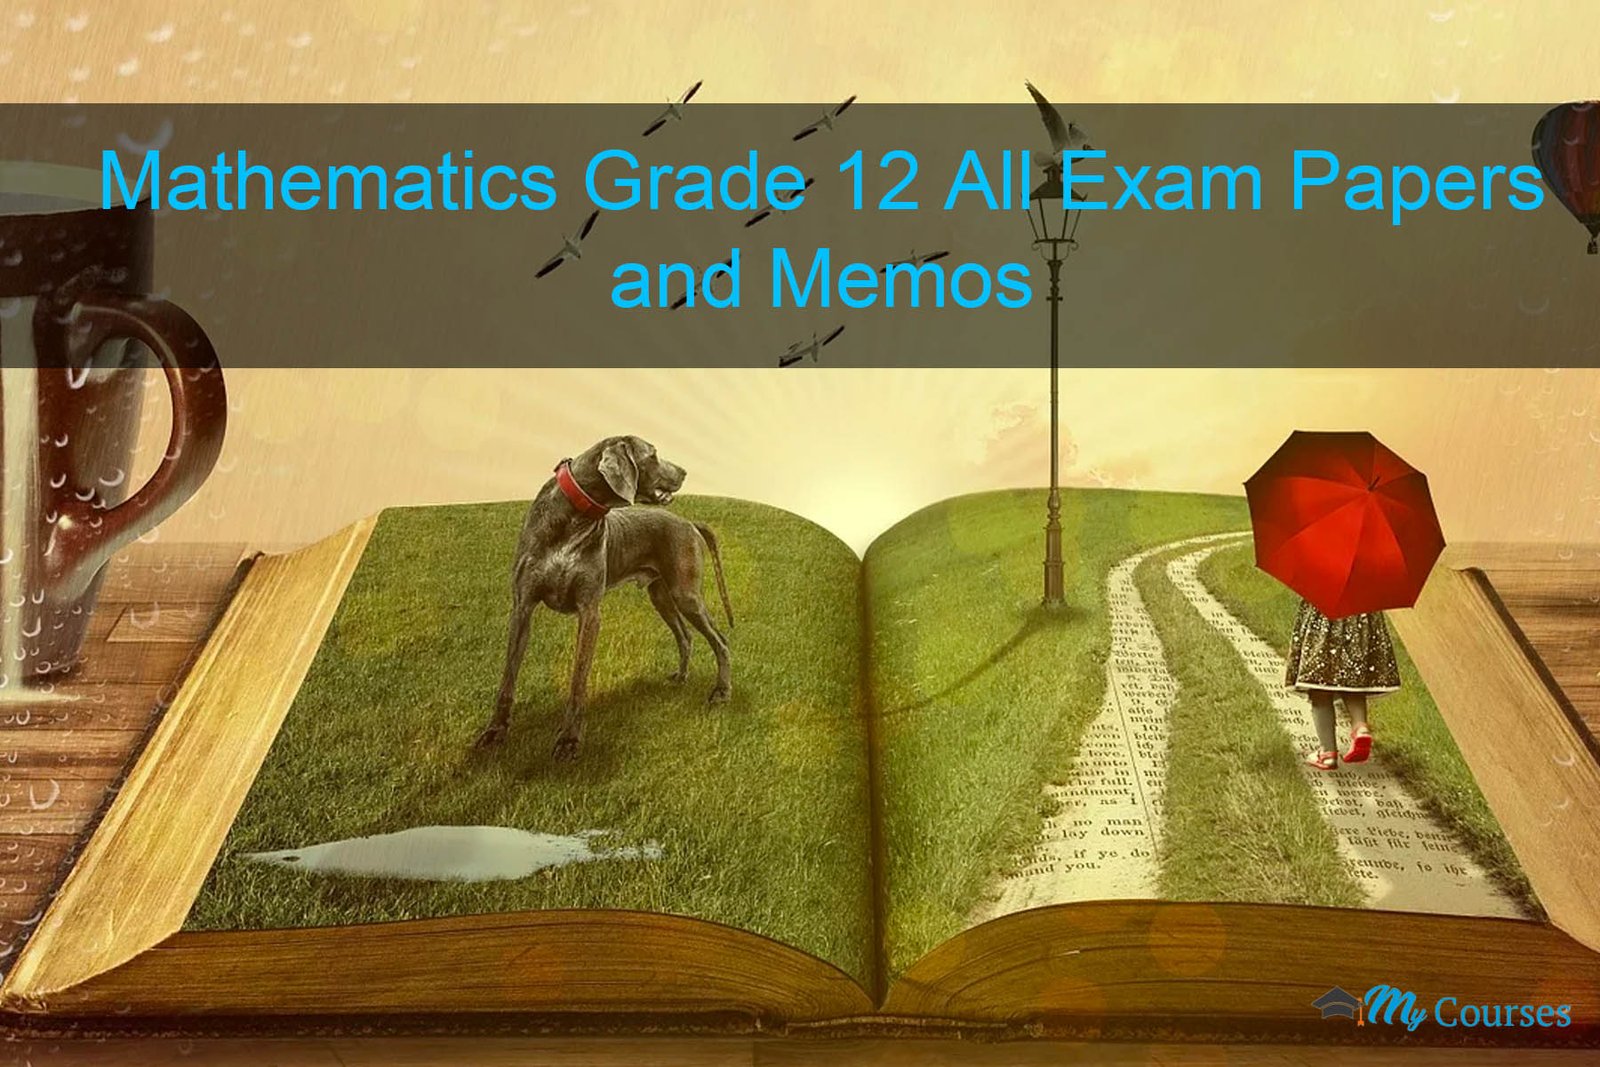 Mathematics Grade 12 All Exam Papers and Memos